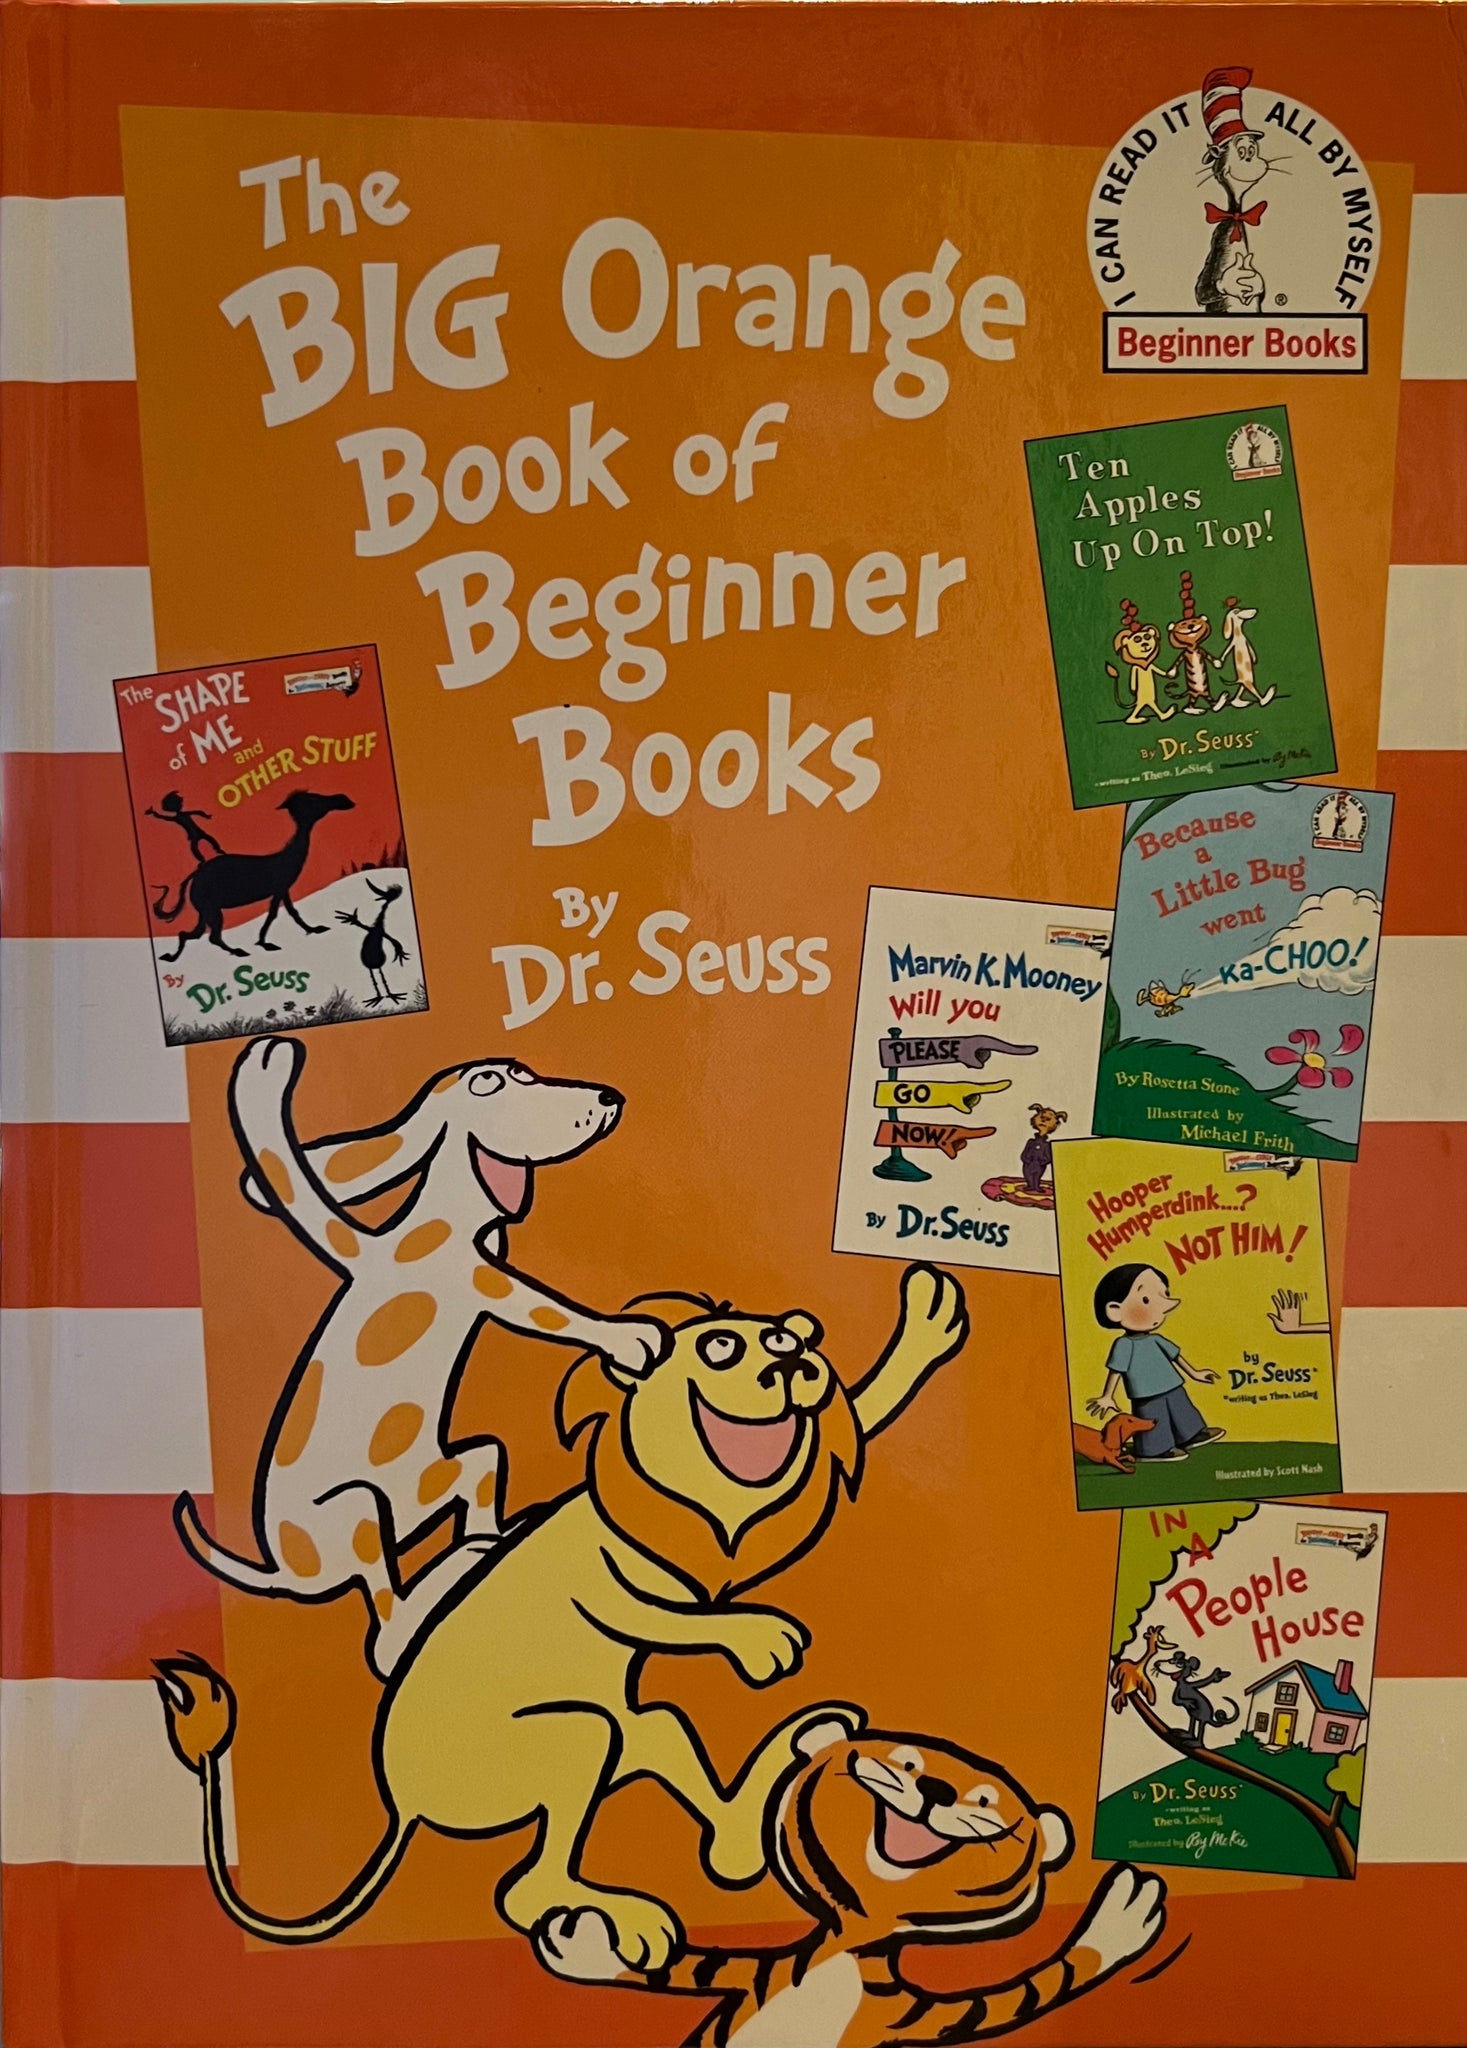 The Big Orange Book of Beginner Books, Dr. Seuss